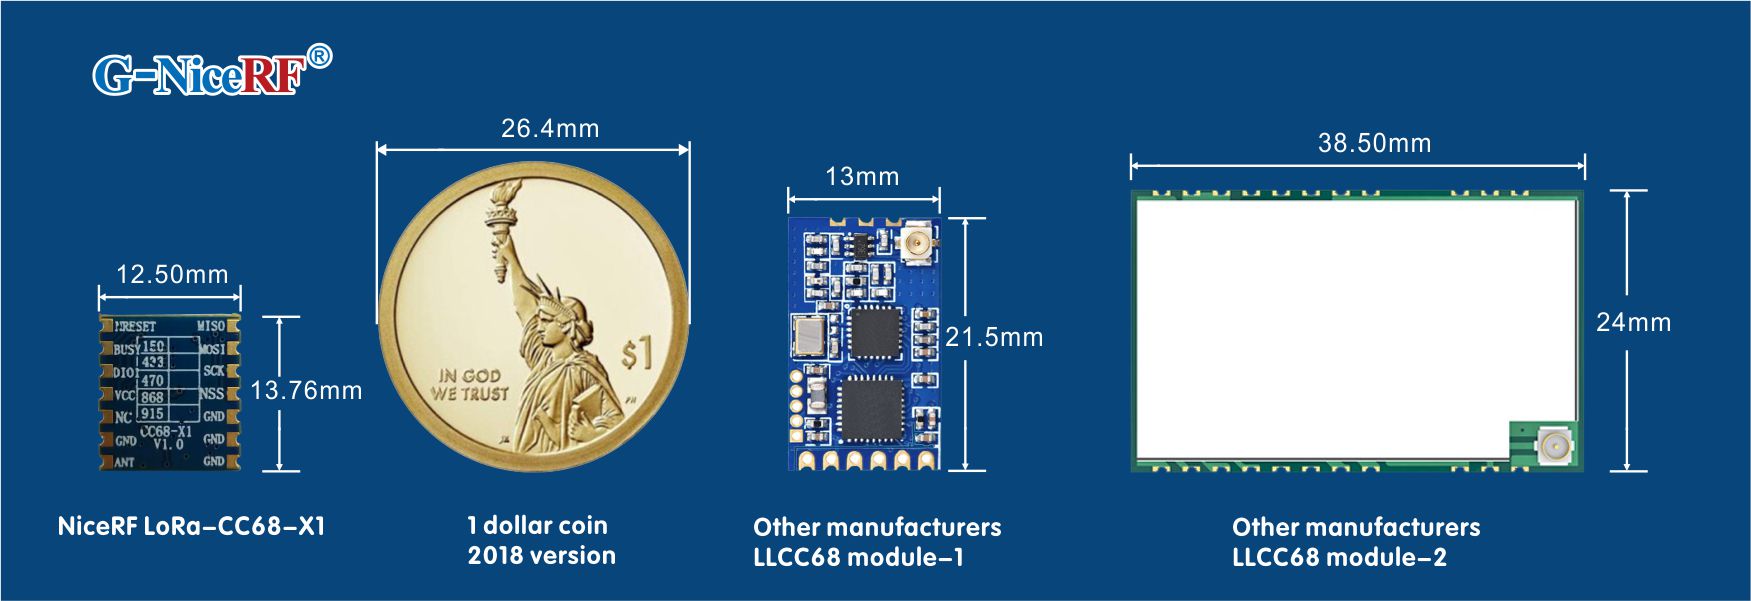 LLCC68 LoRa module LoRa-CC68-X1 with small size design 